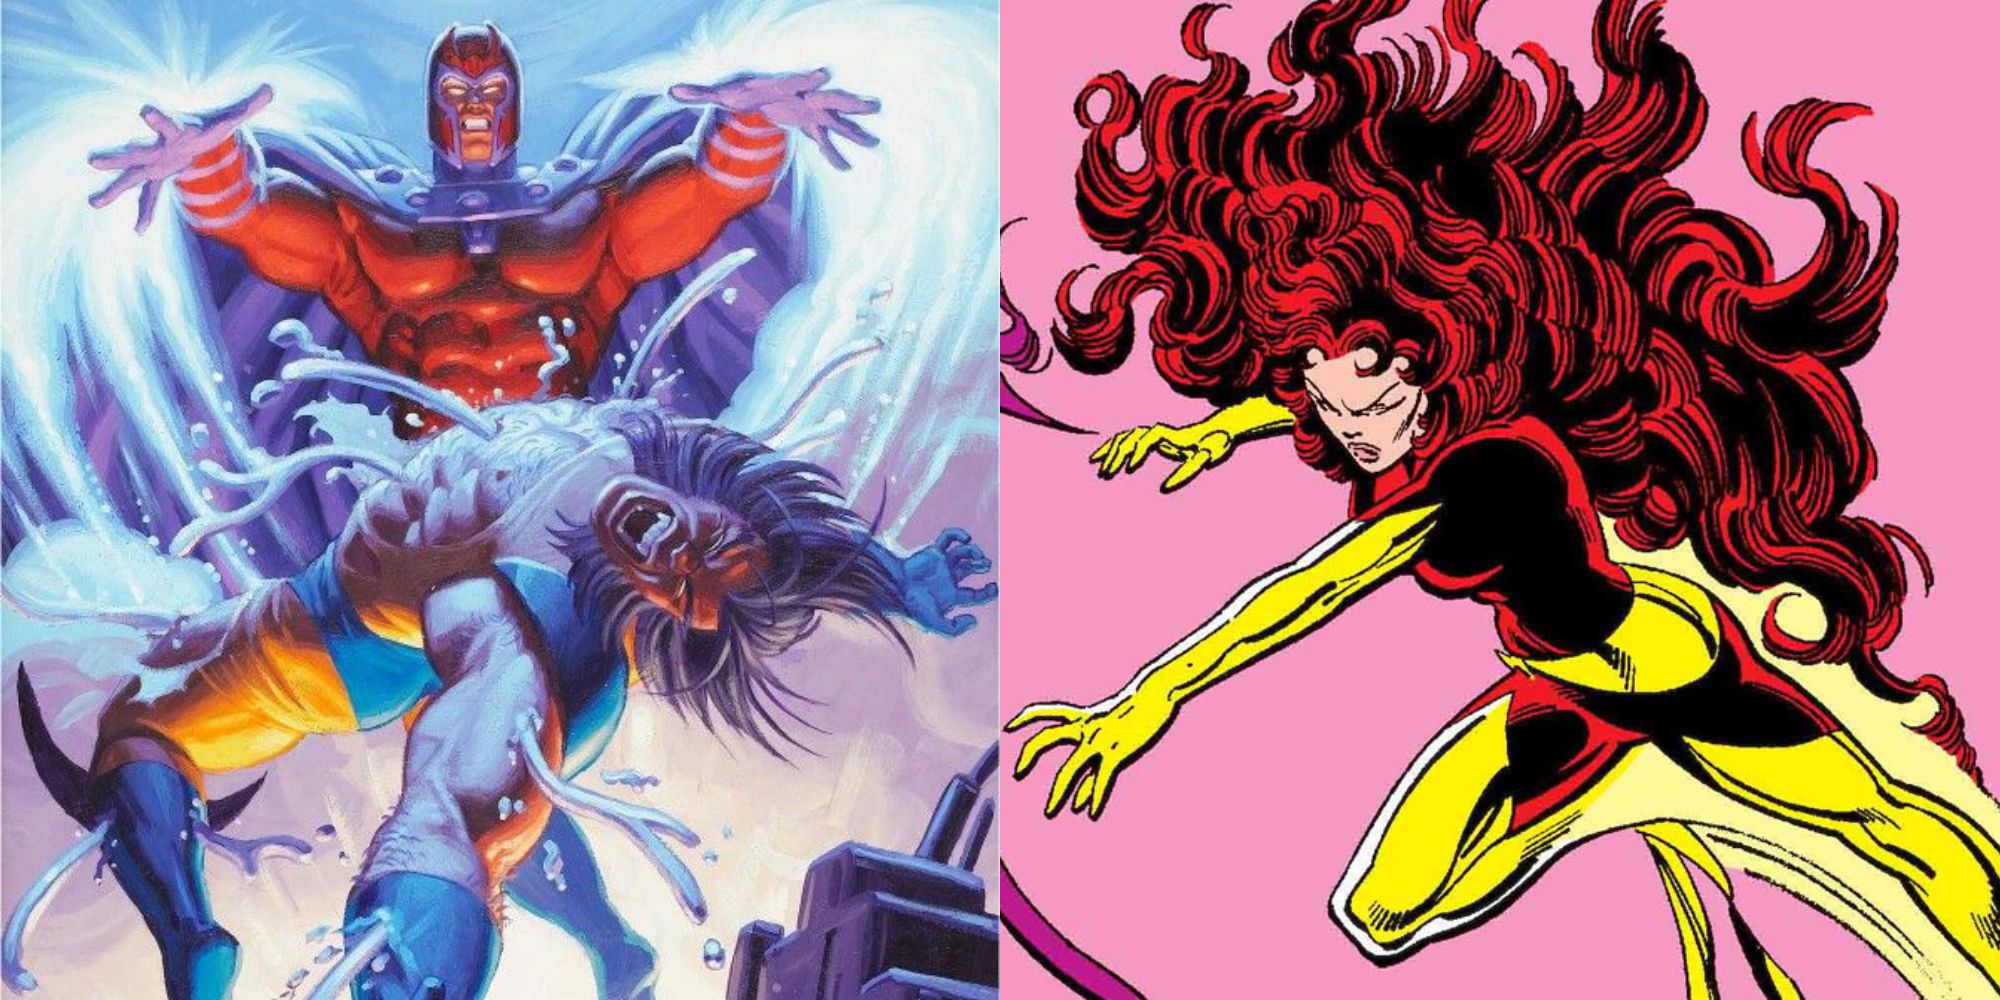 Split image showing Magneto with Wolverine and Dark Phoenix in X-Men comics.